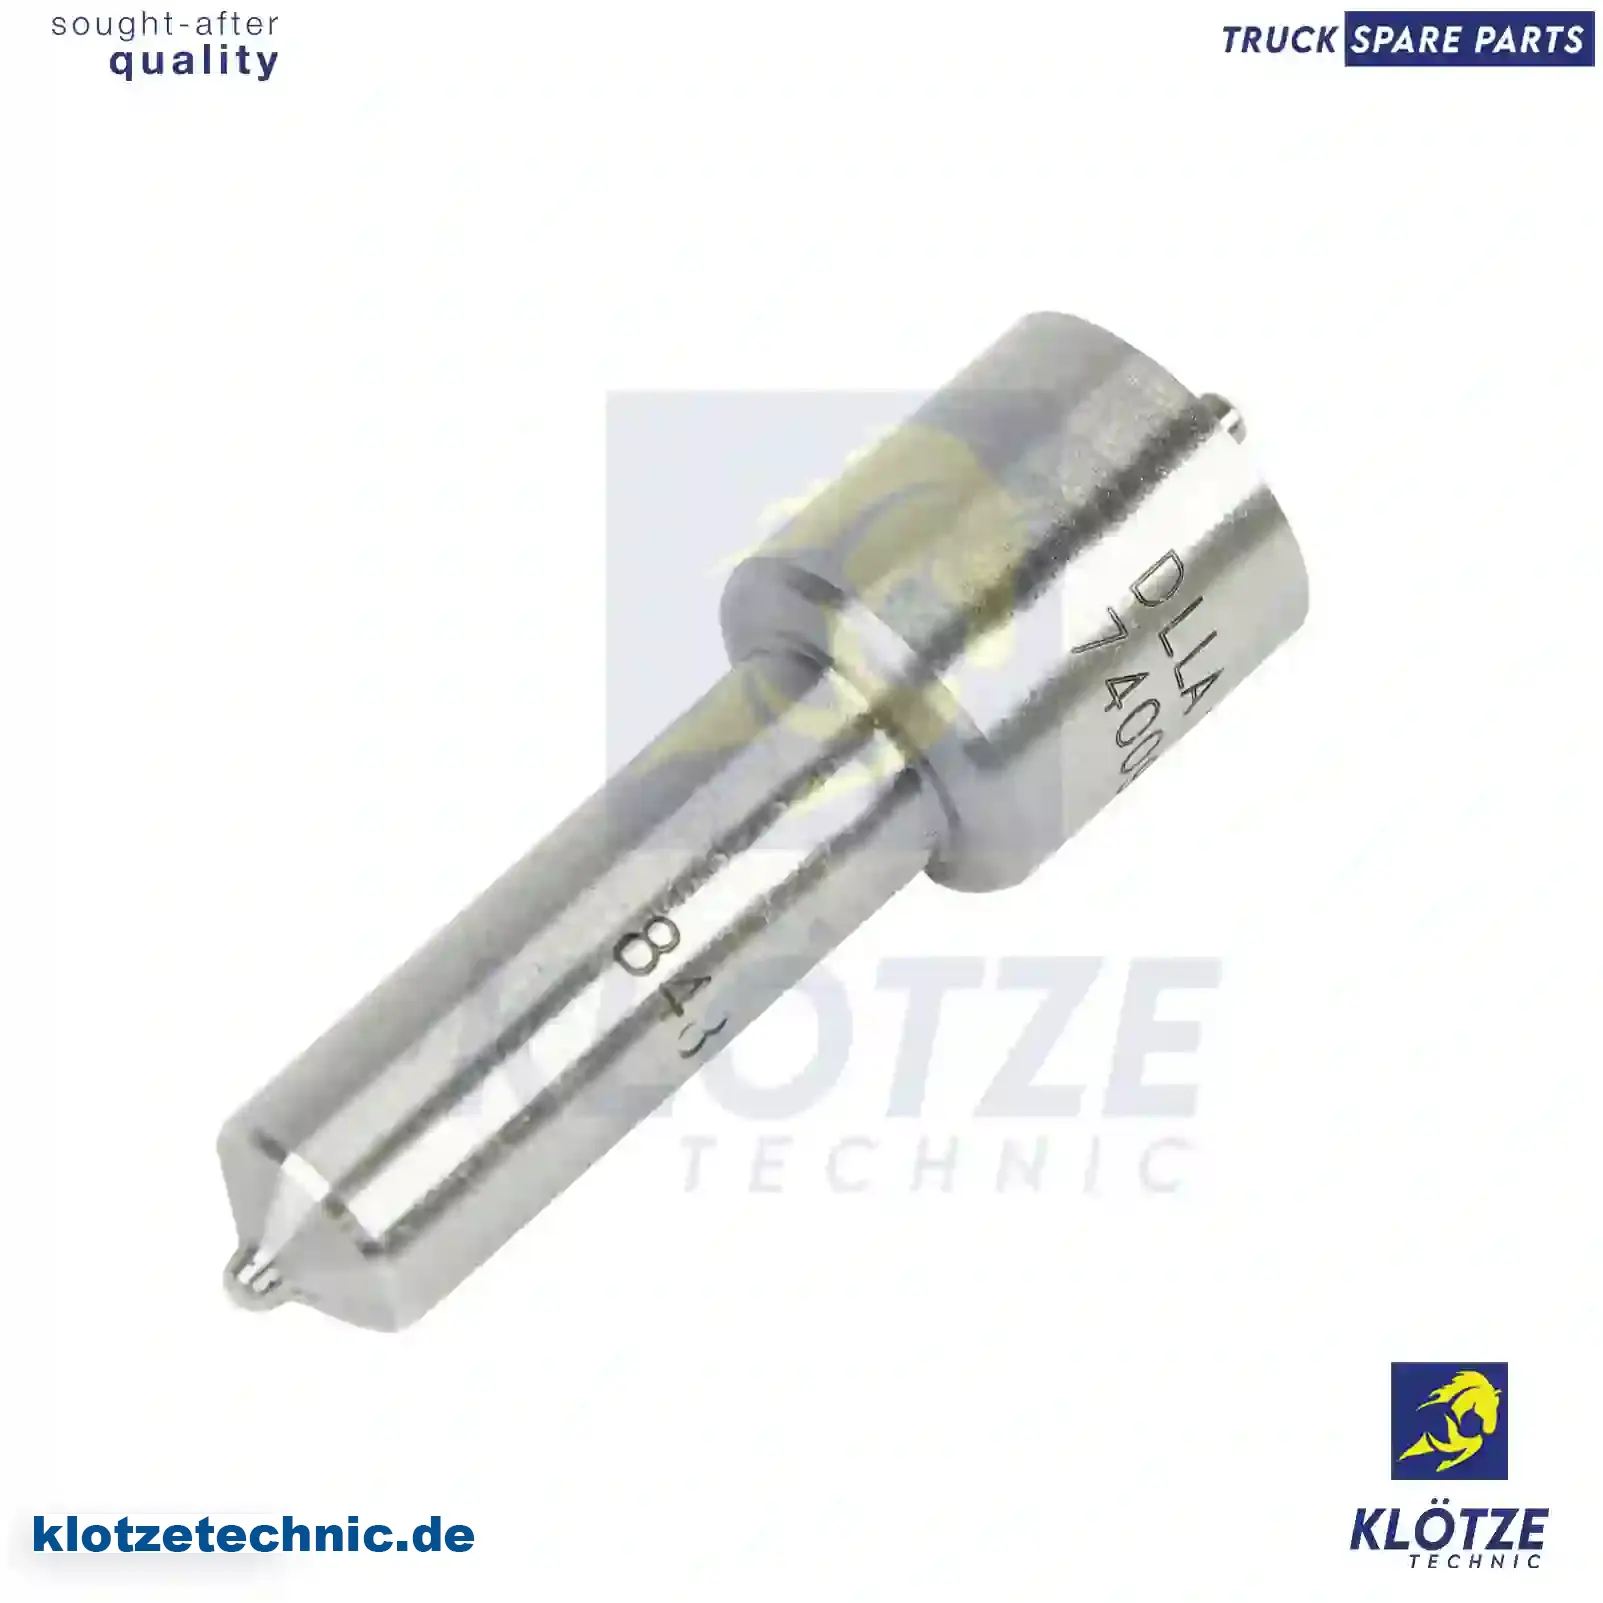 Injection nozzle, 51101020221 || Klötze Technic